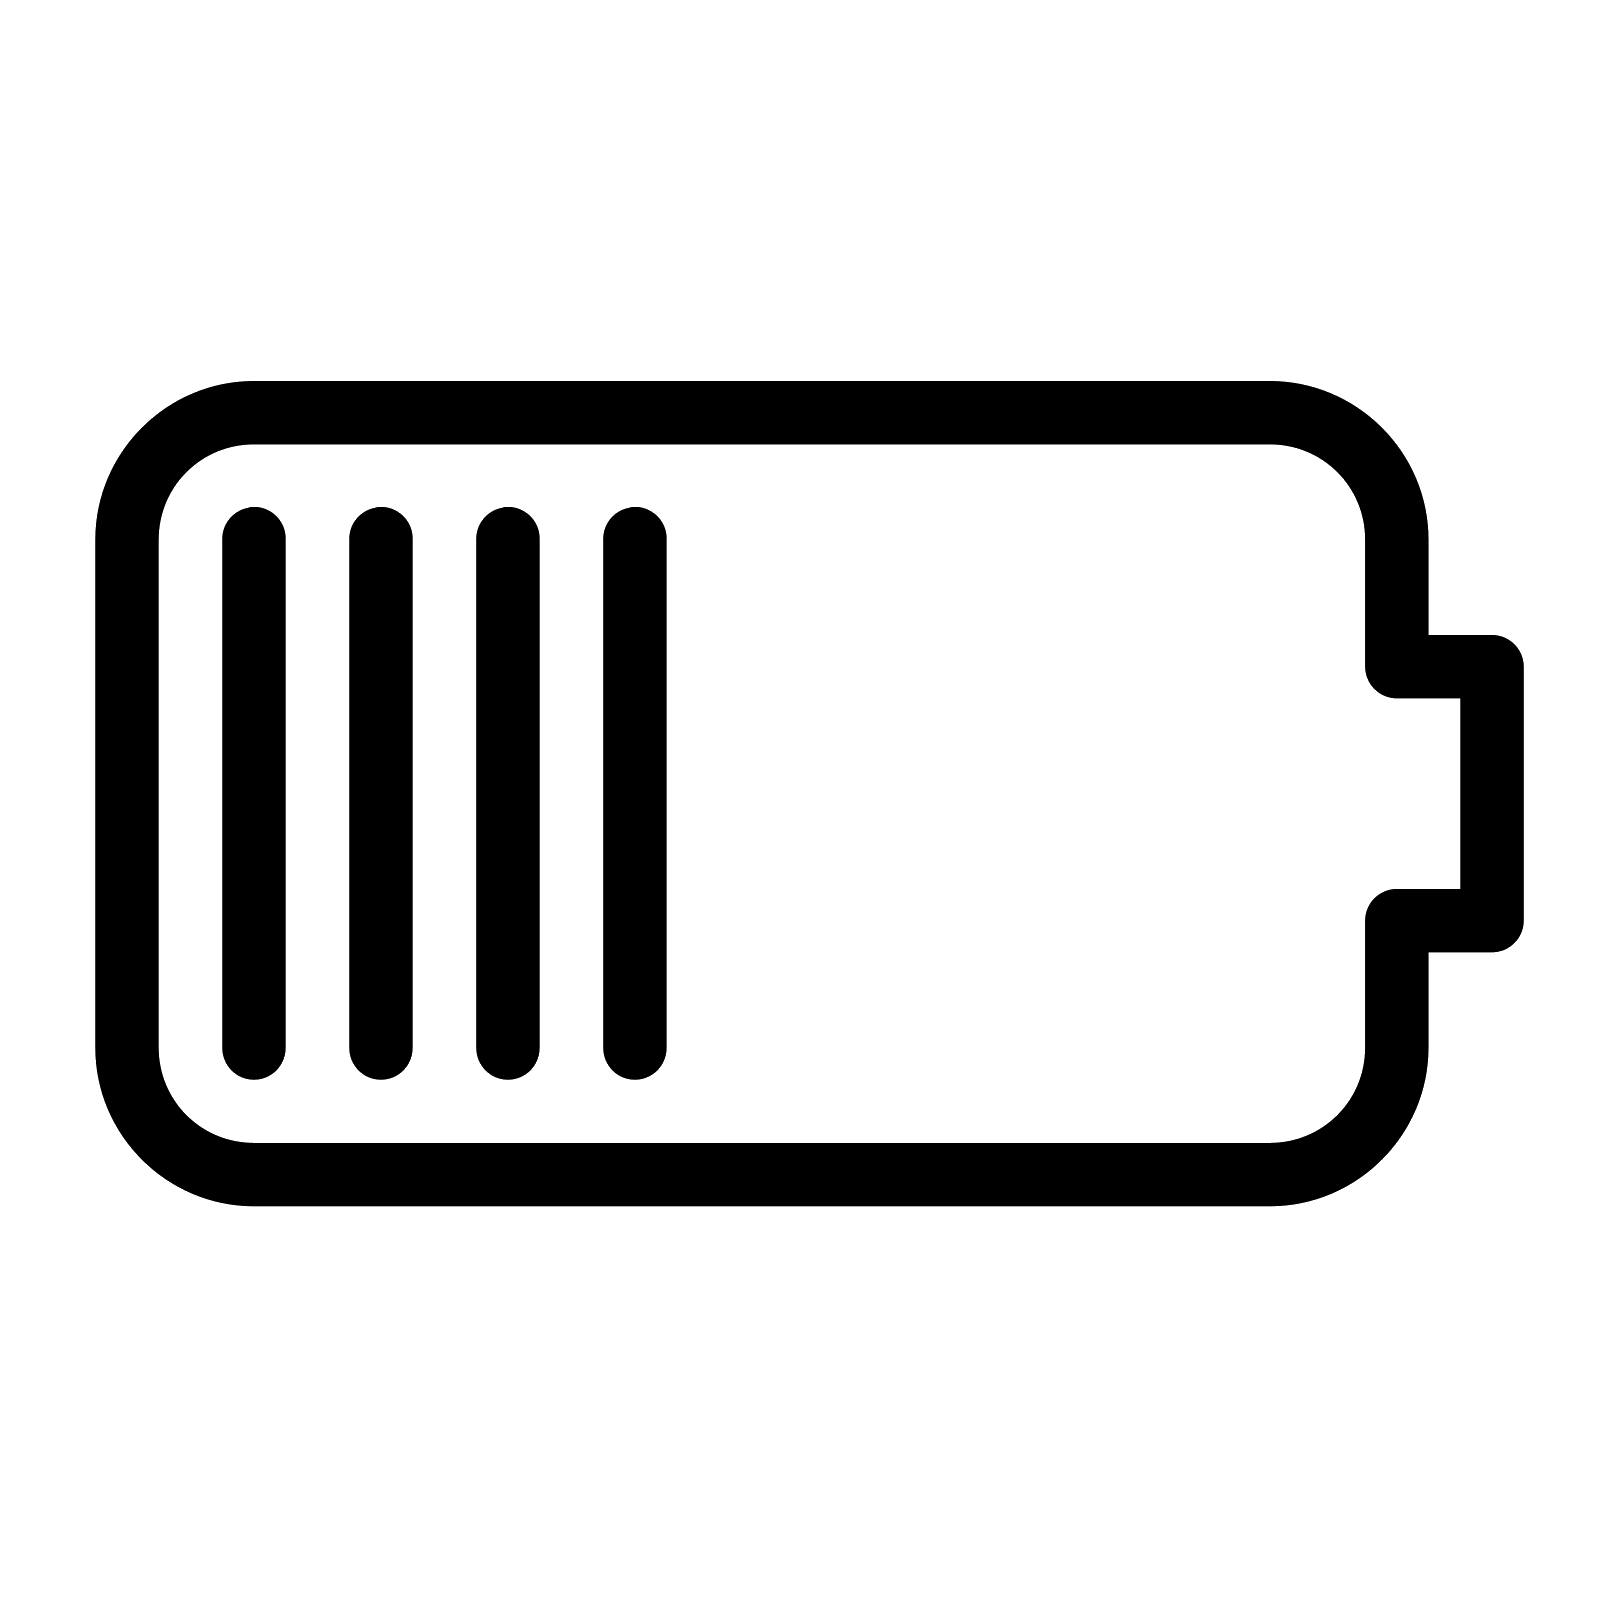 Battery level icon 2 stock vector. Illustration of symbol - 20546277